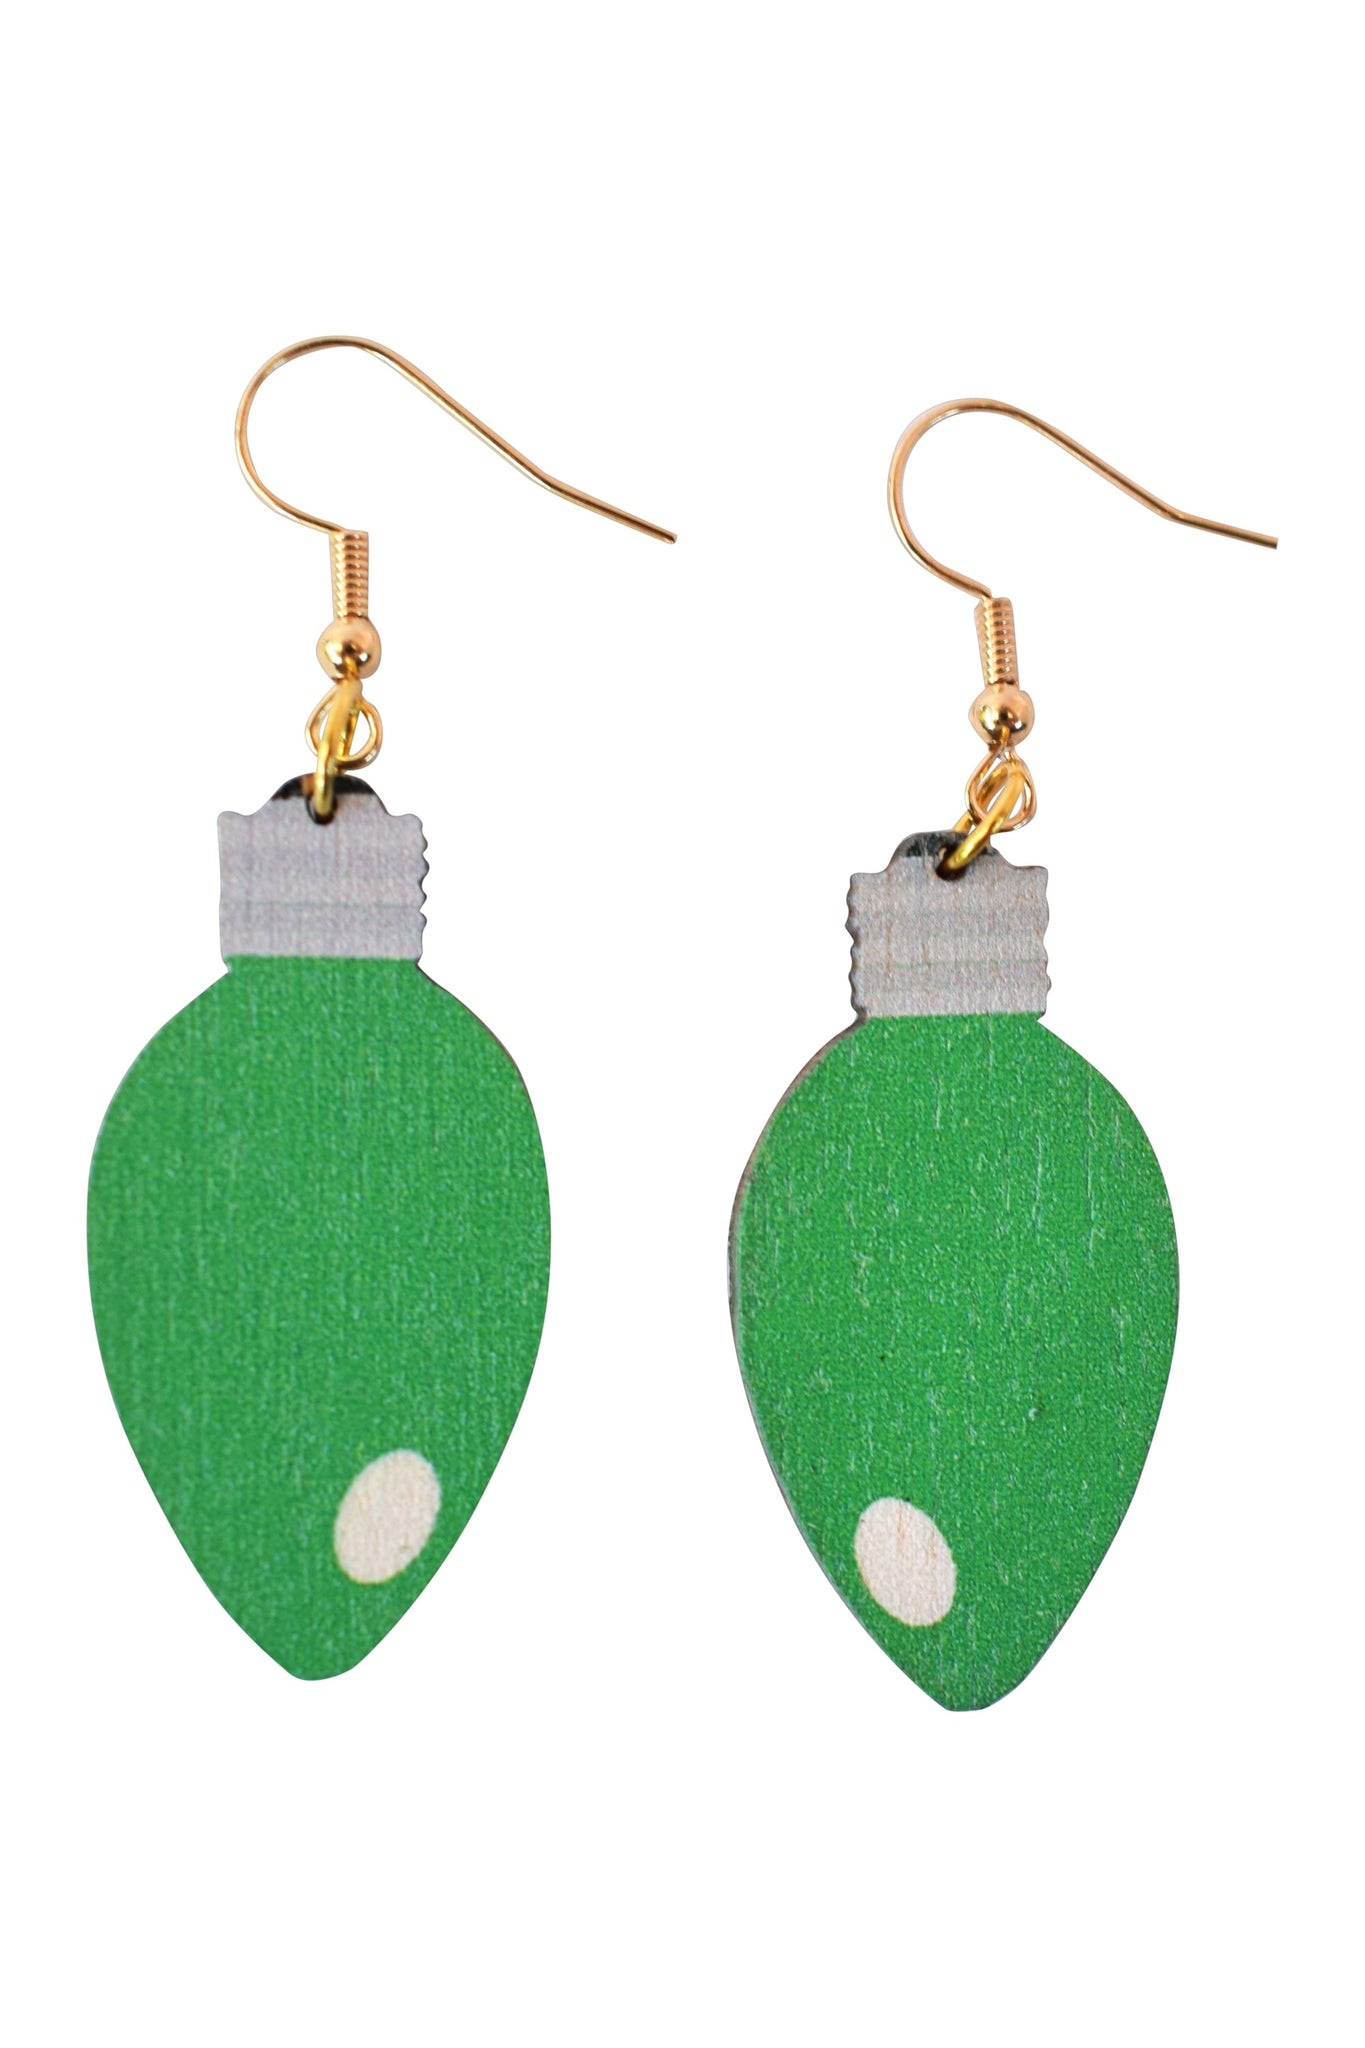 Green Christmas Bulb Earrings